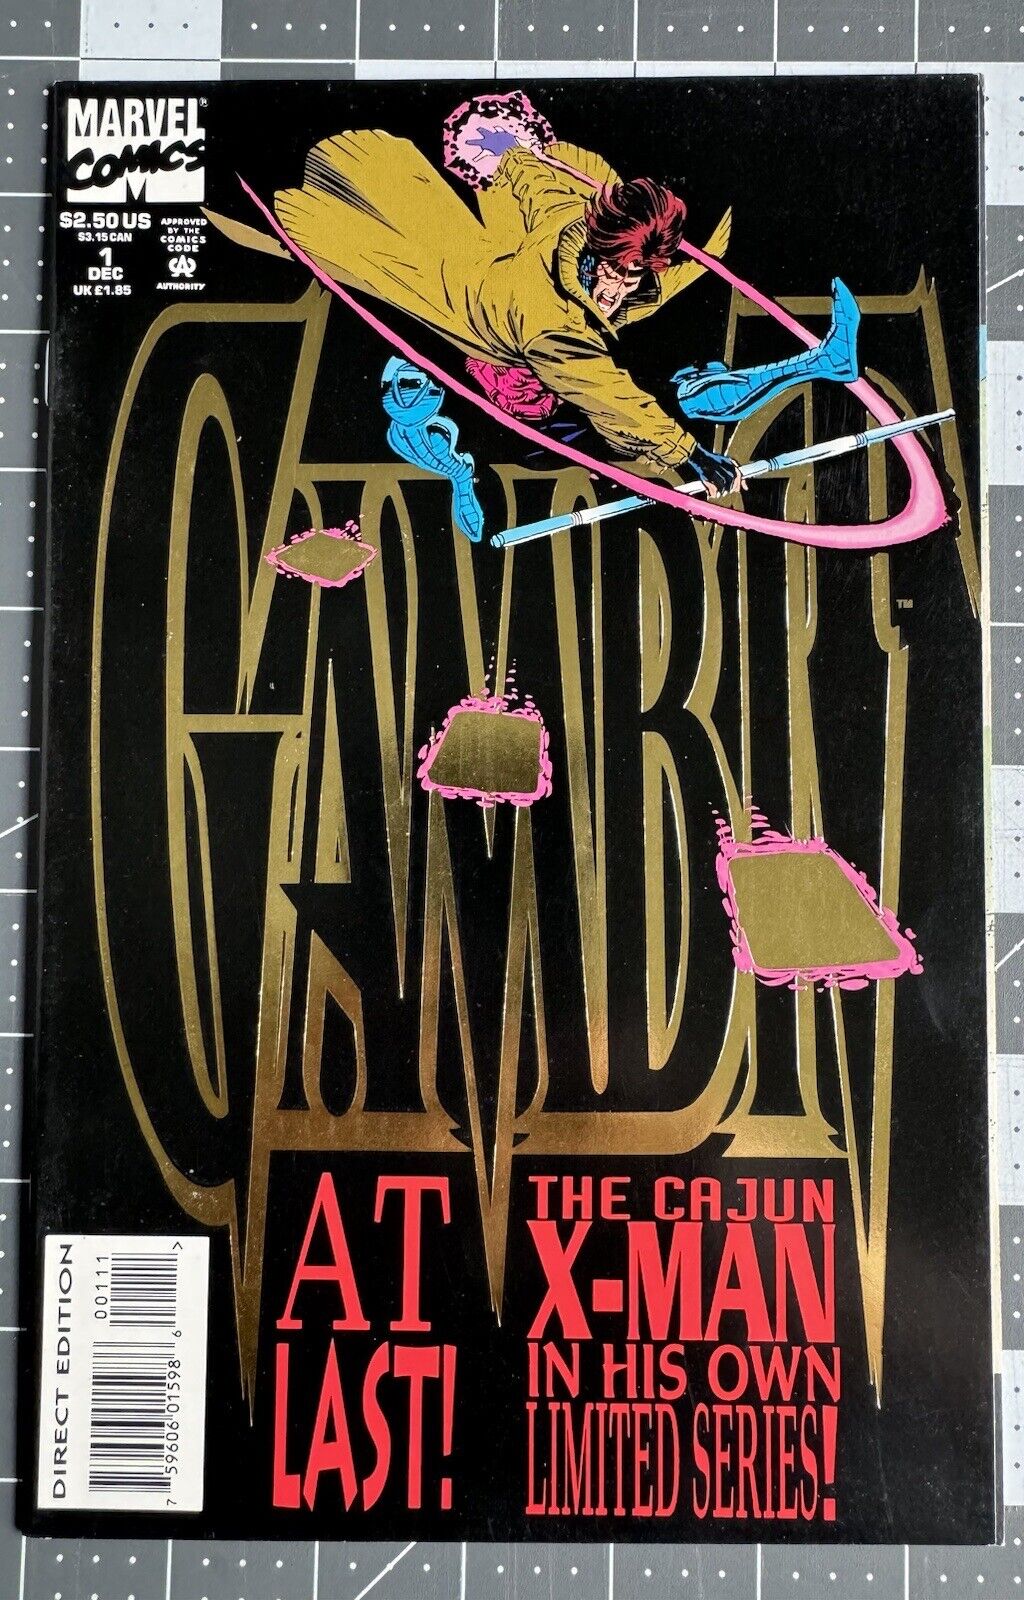 Gambit #1 1993 Marvel Comics Gold Foil 1st Solo Series VF/NM